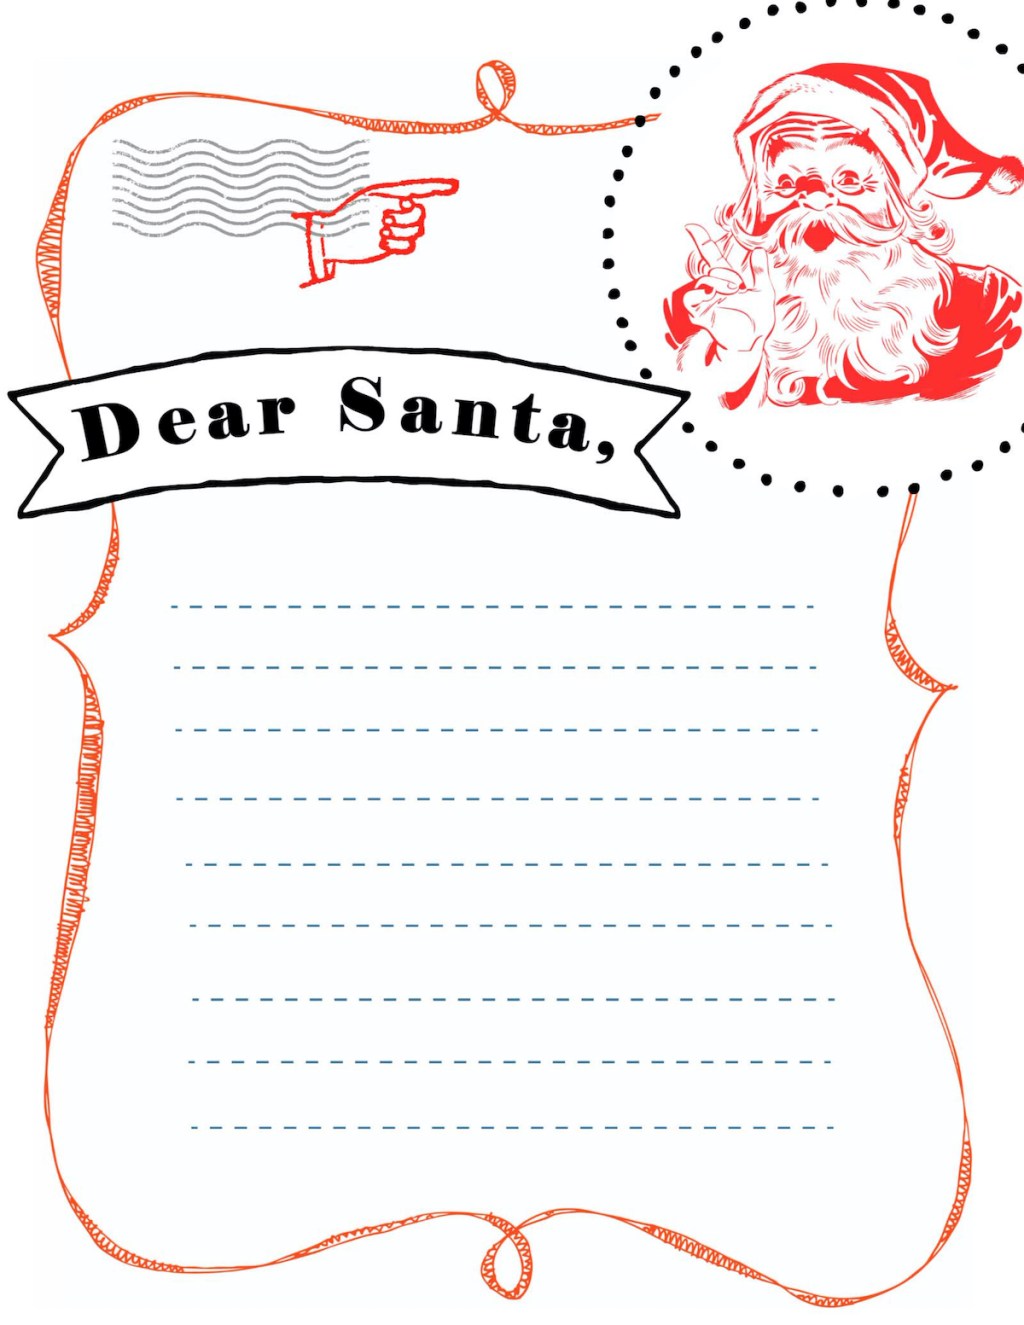 Dear Santa letter printable